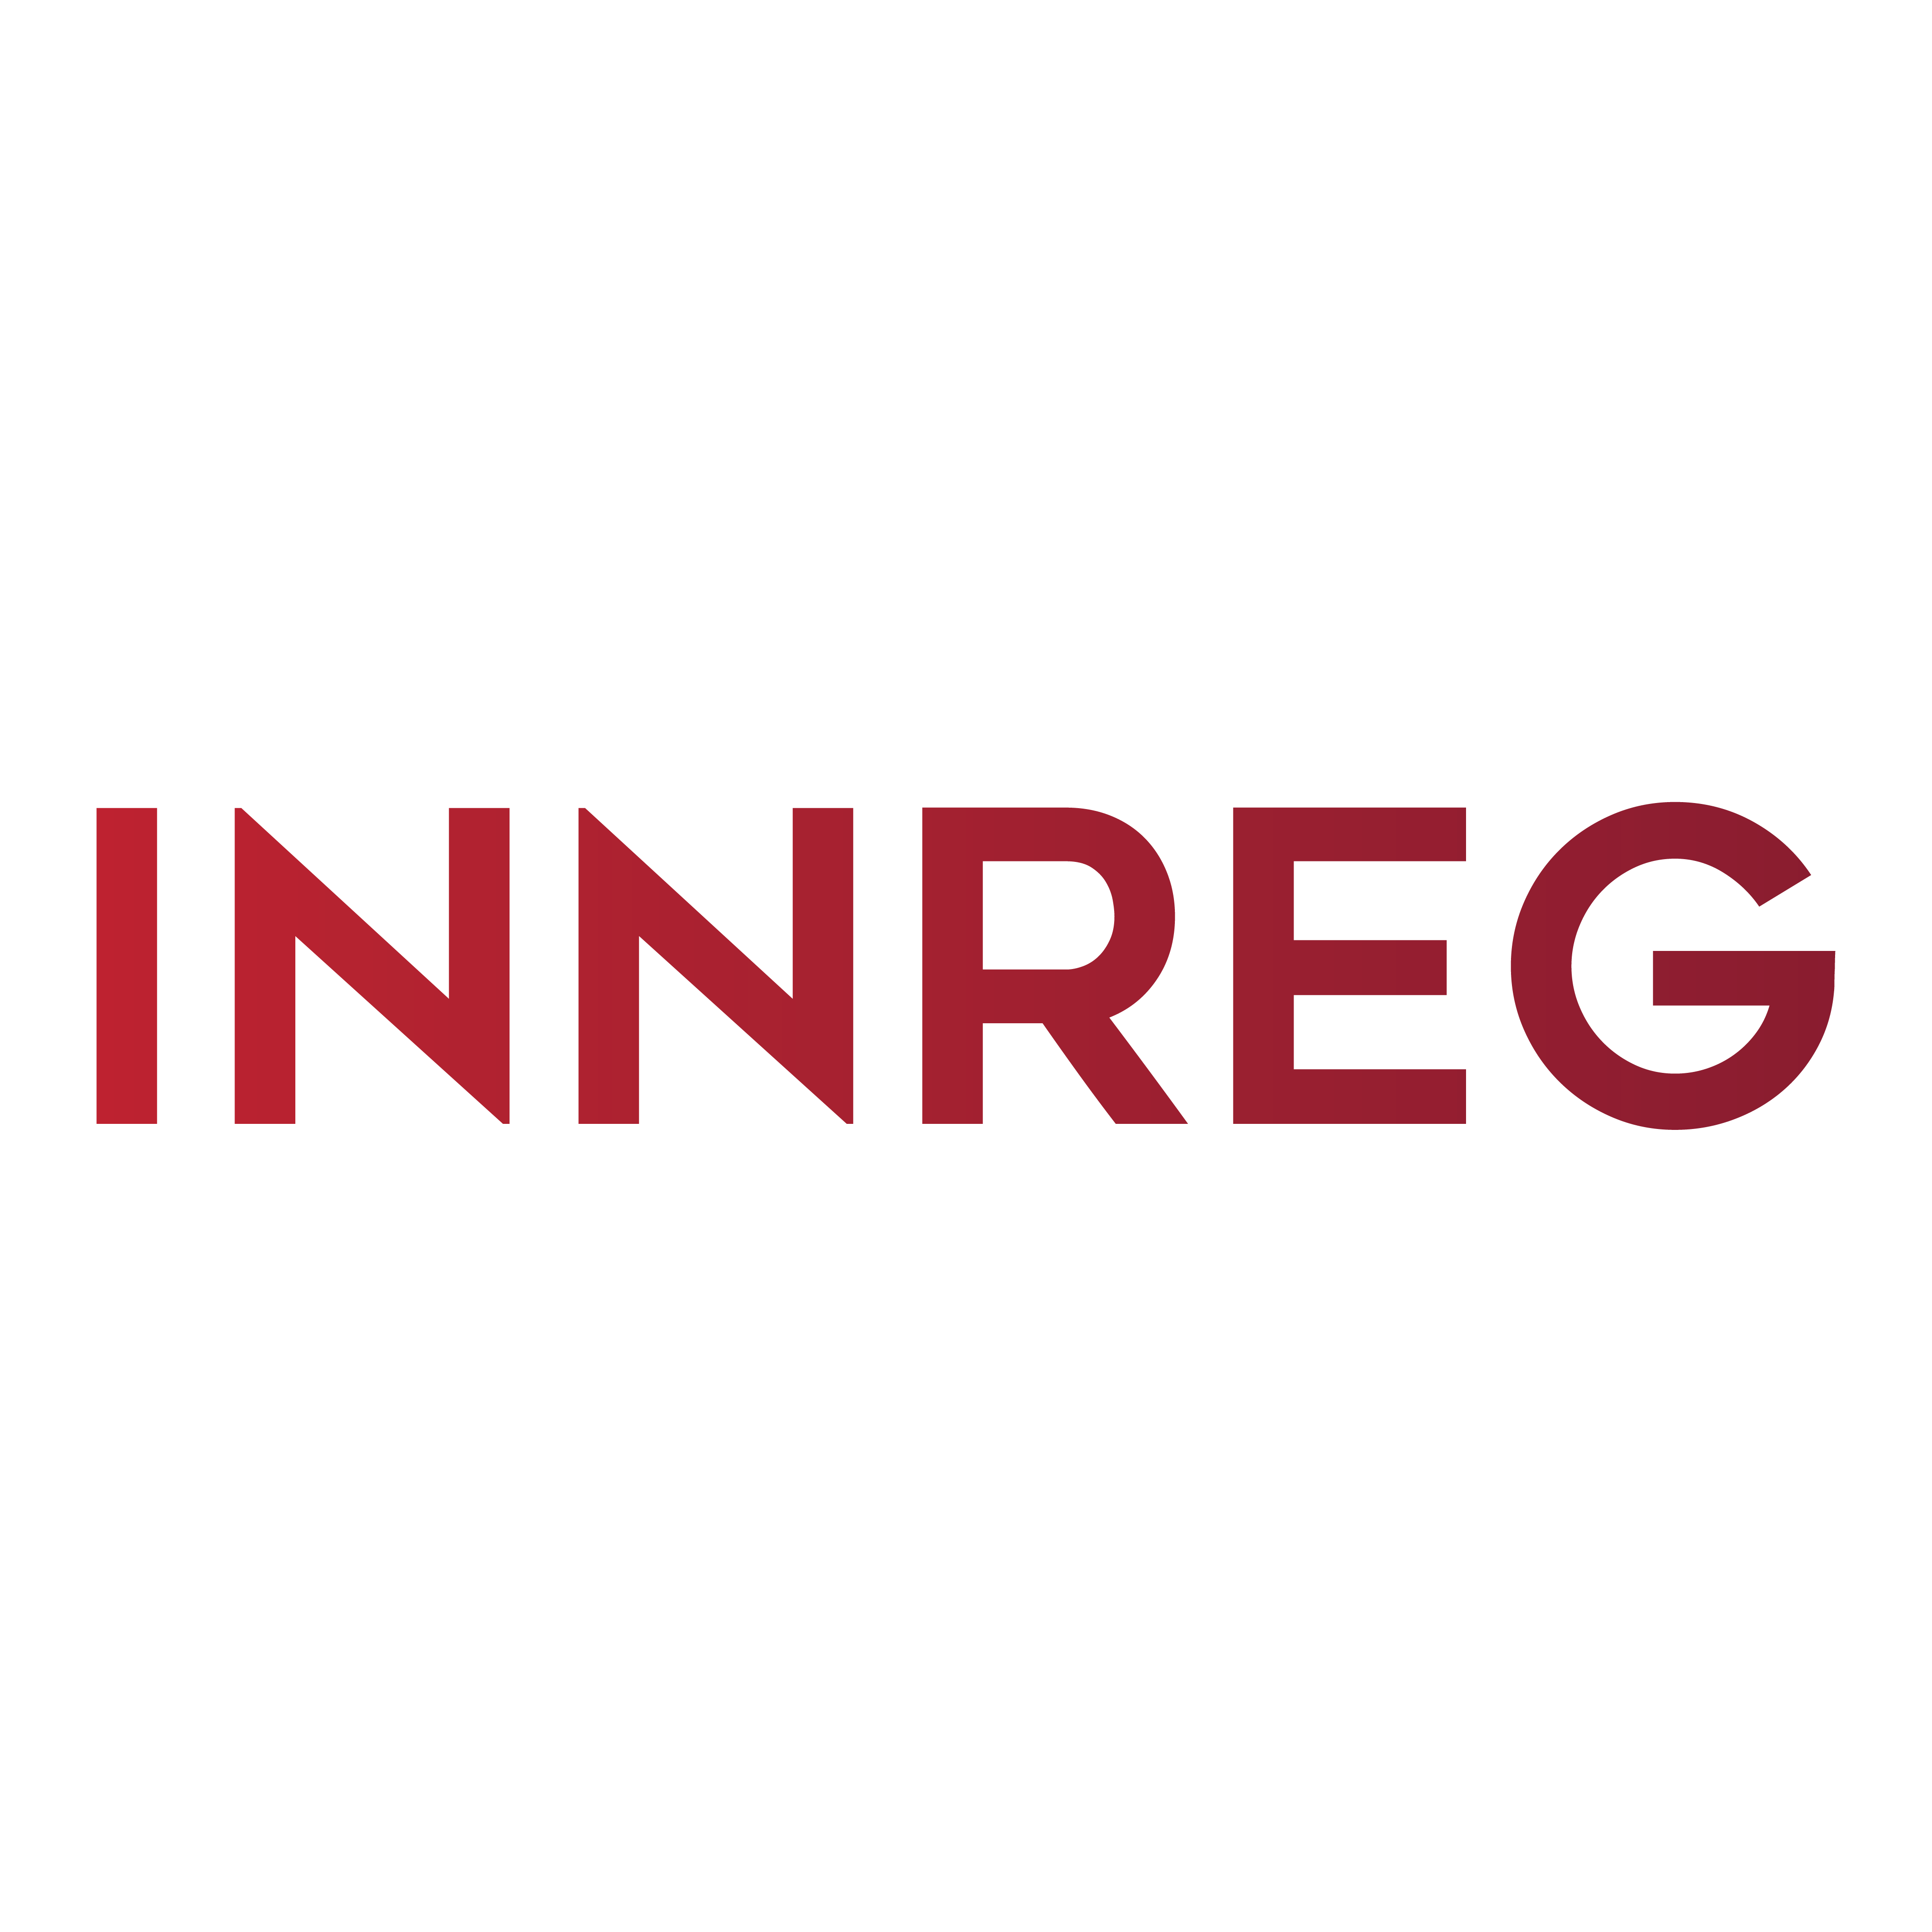 InnReg LLC